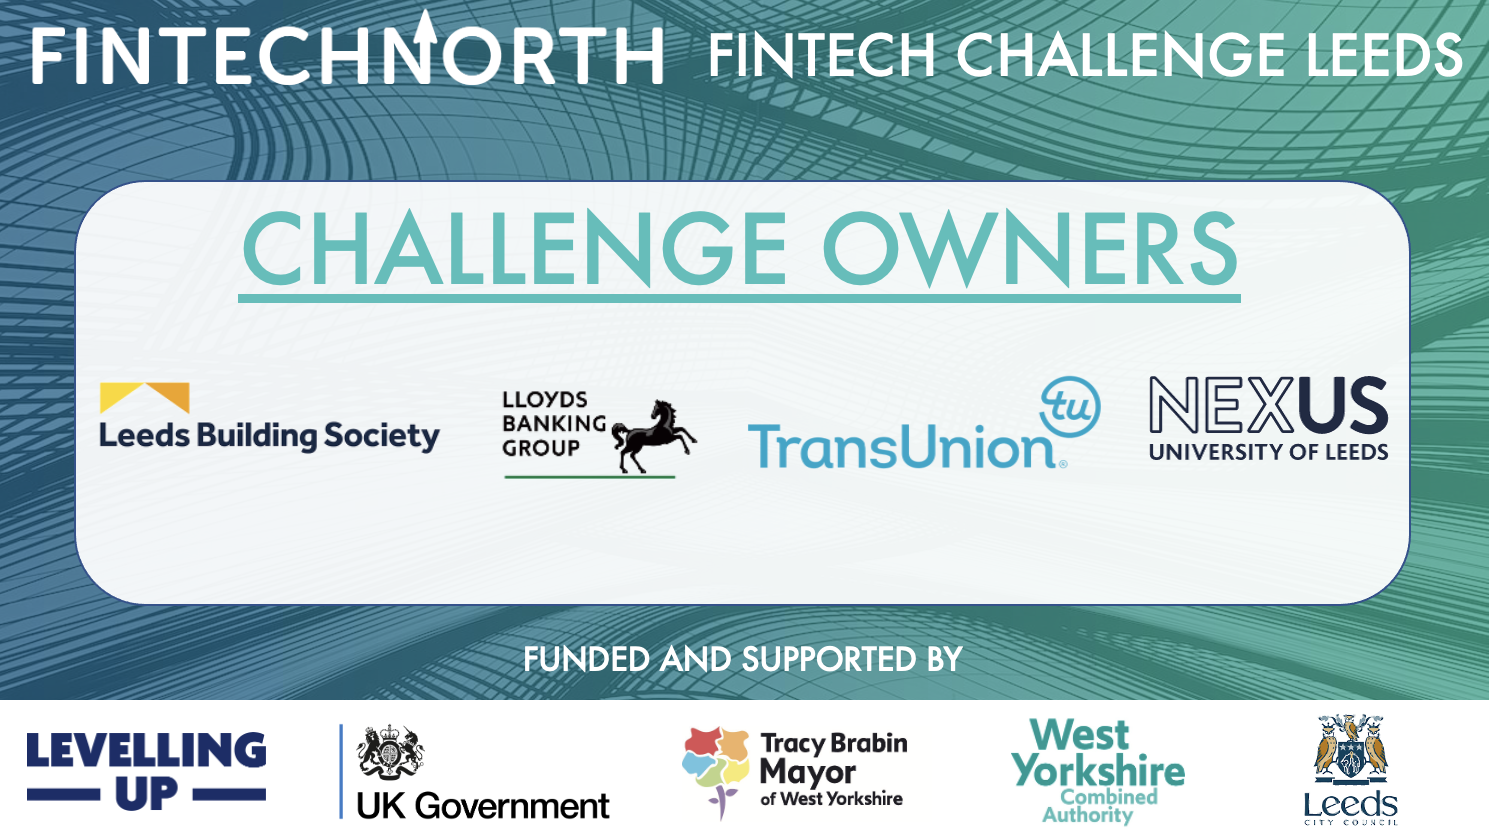 FinTech North announces final five challenge areas as part of the FinTech Challenge Leeds – a FinTech Innovation Challenge